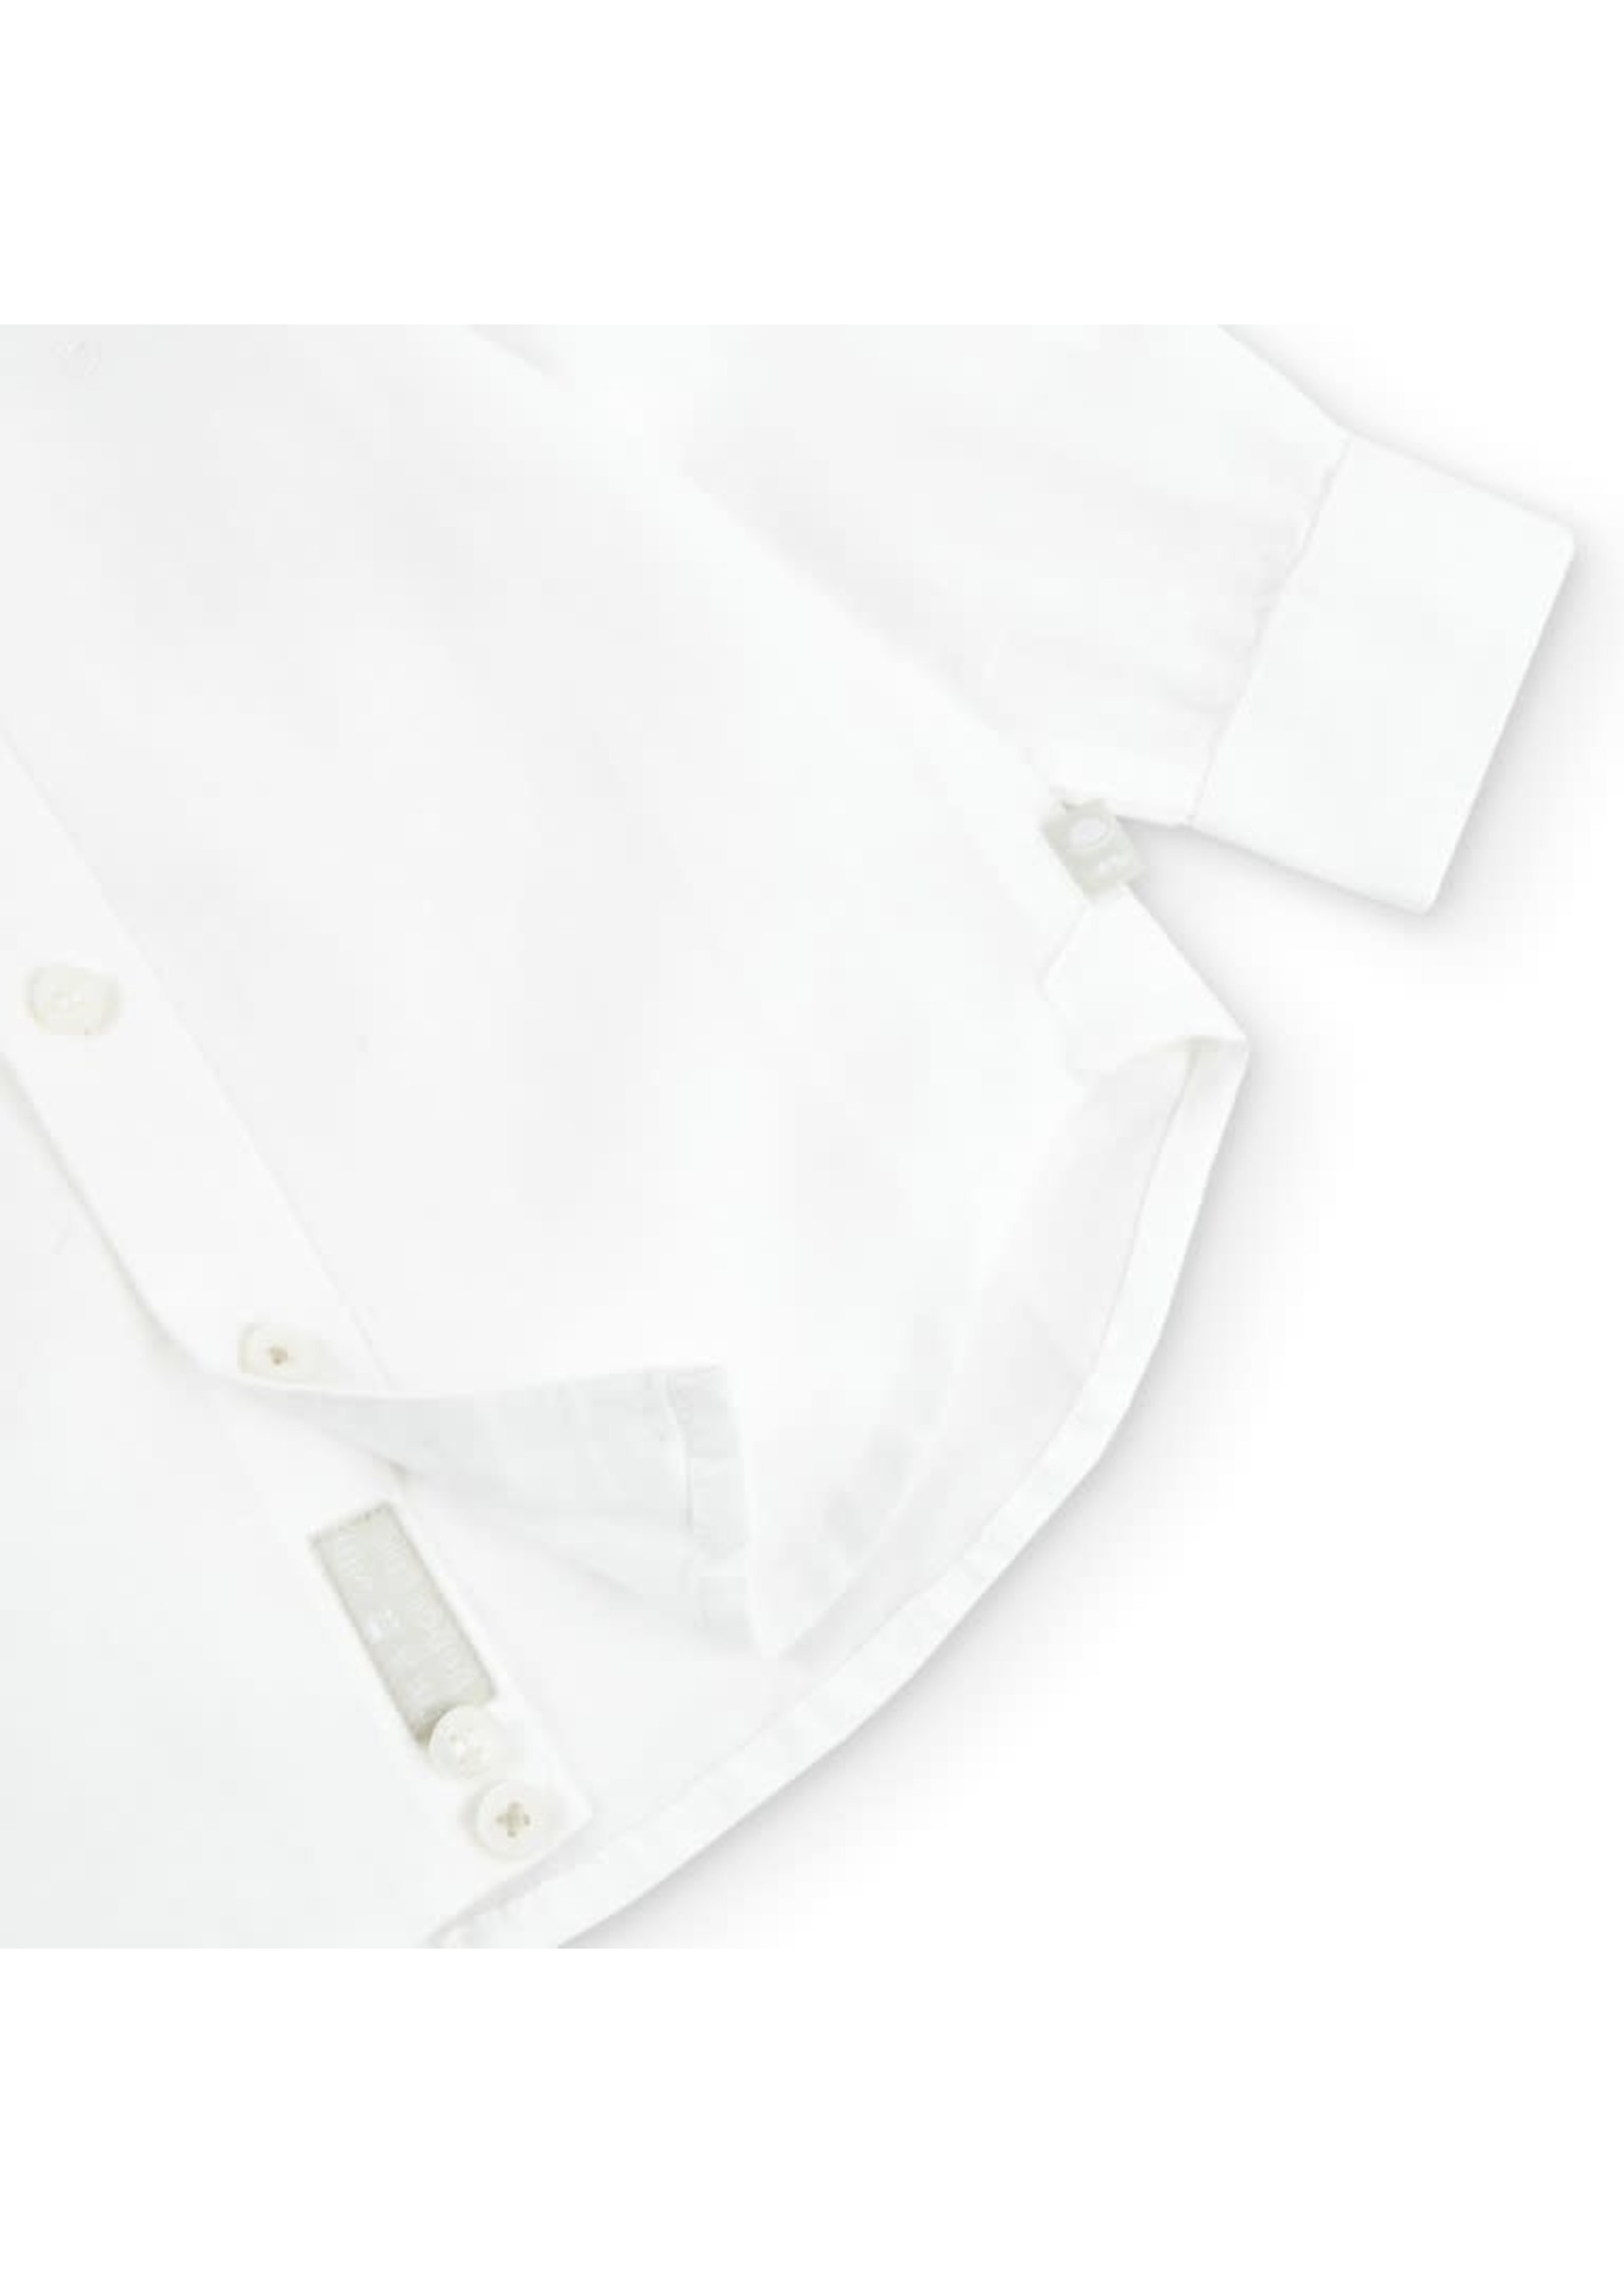 Boboli Linen shirt long sleeves for baby boy WHITE 716330B